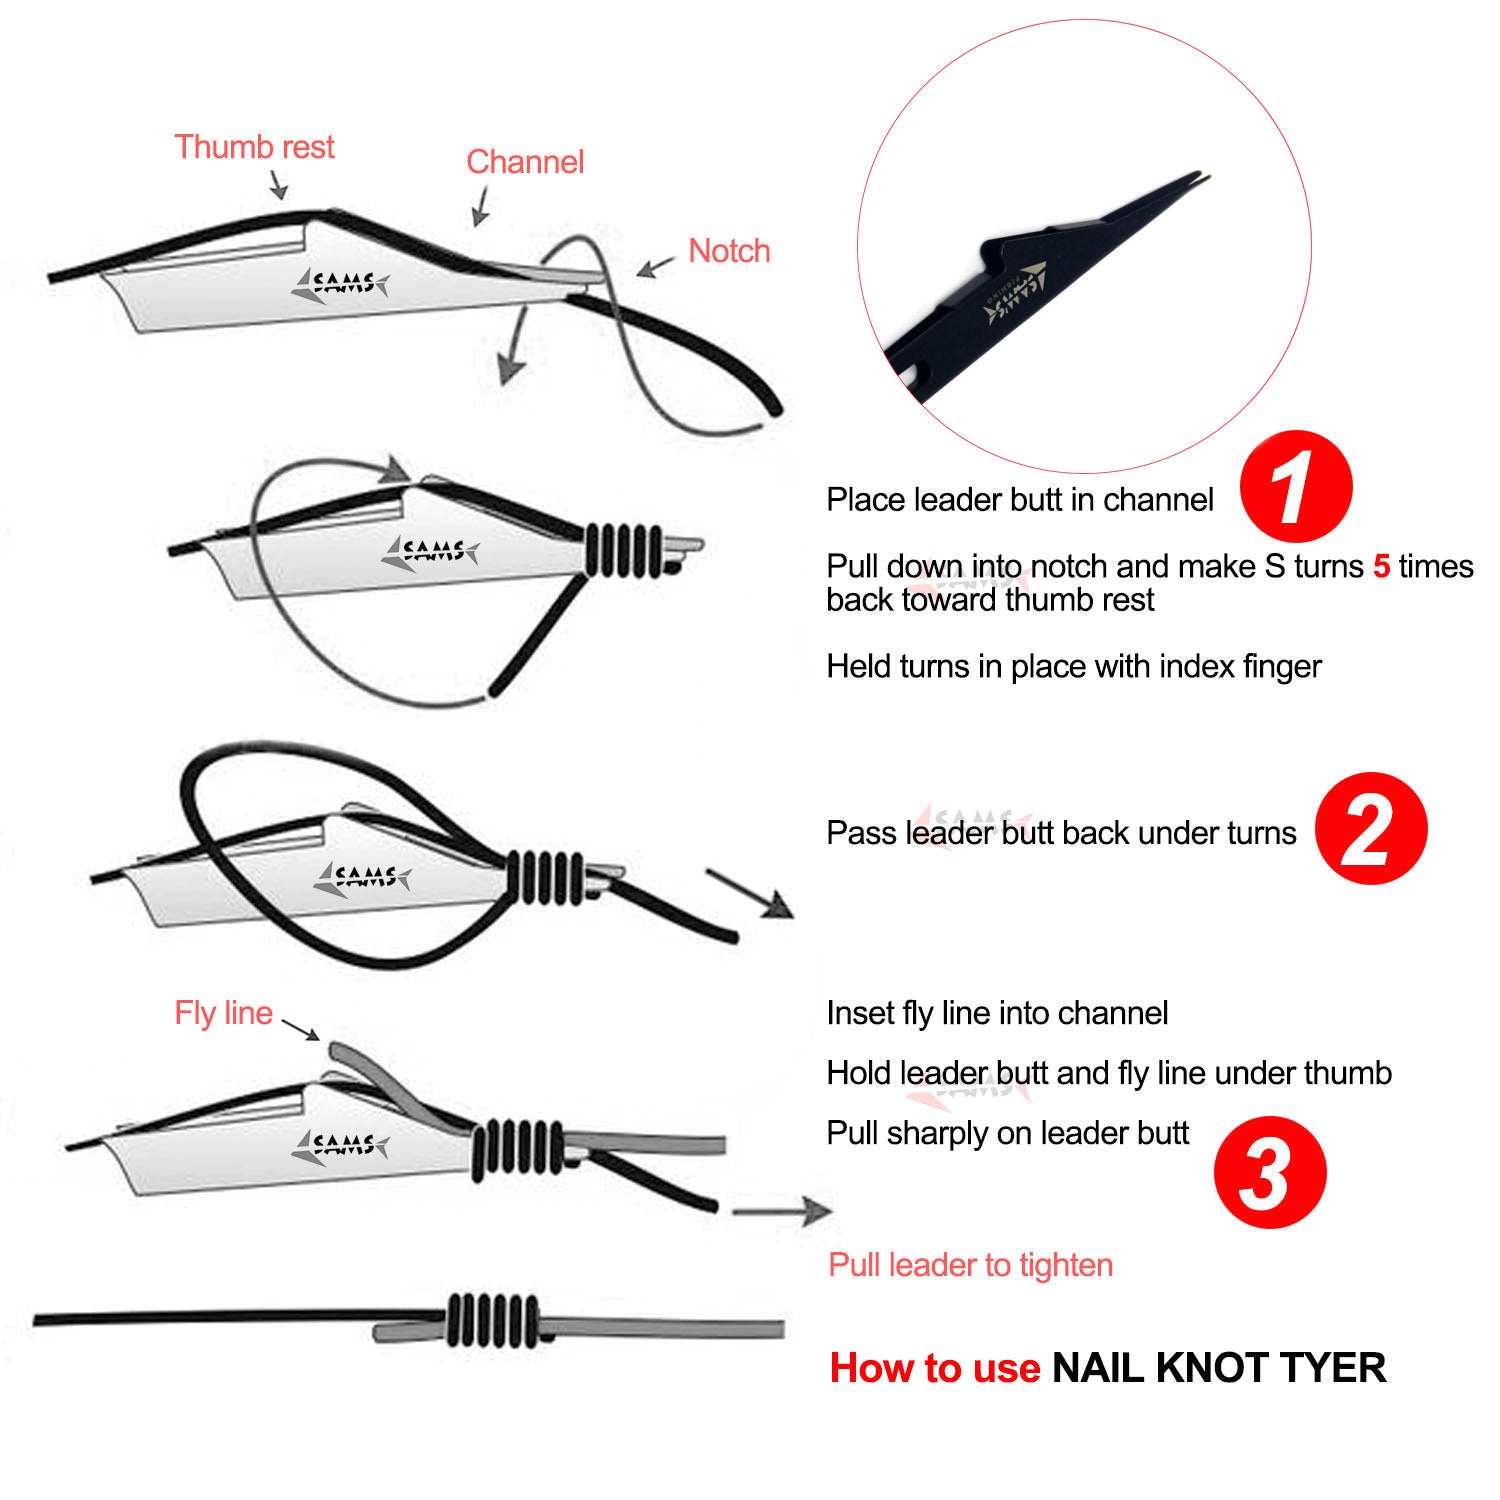 Quick Knot Tool, Loop Tyer, Hook Remover, Hair Rig Tying Tool and Zing –  samsfxfishing